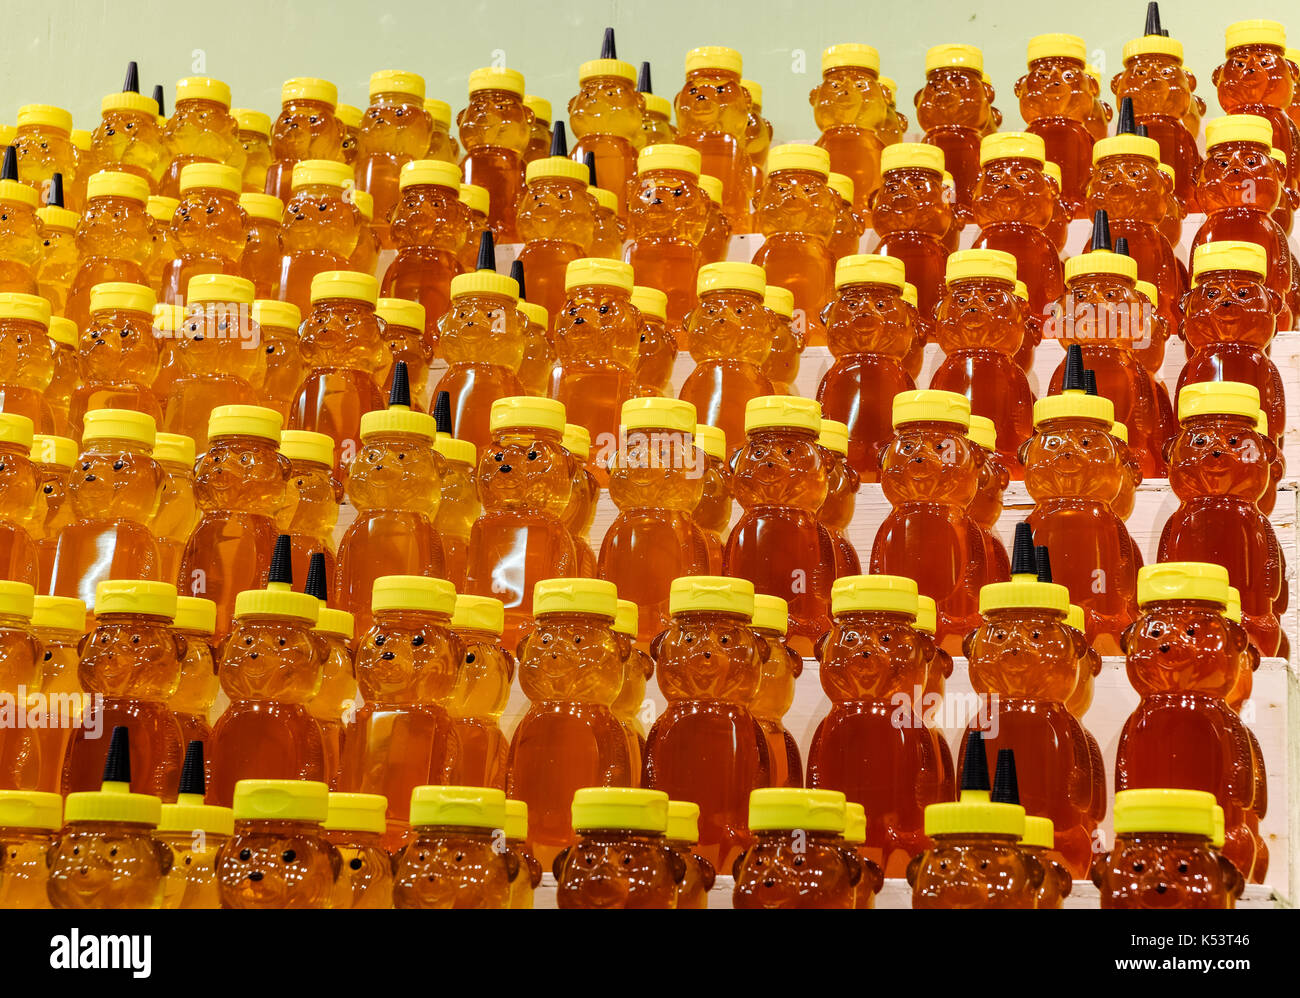 Bear-shaped honey jars on shelves. Stock Photo